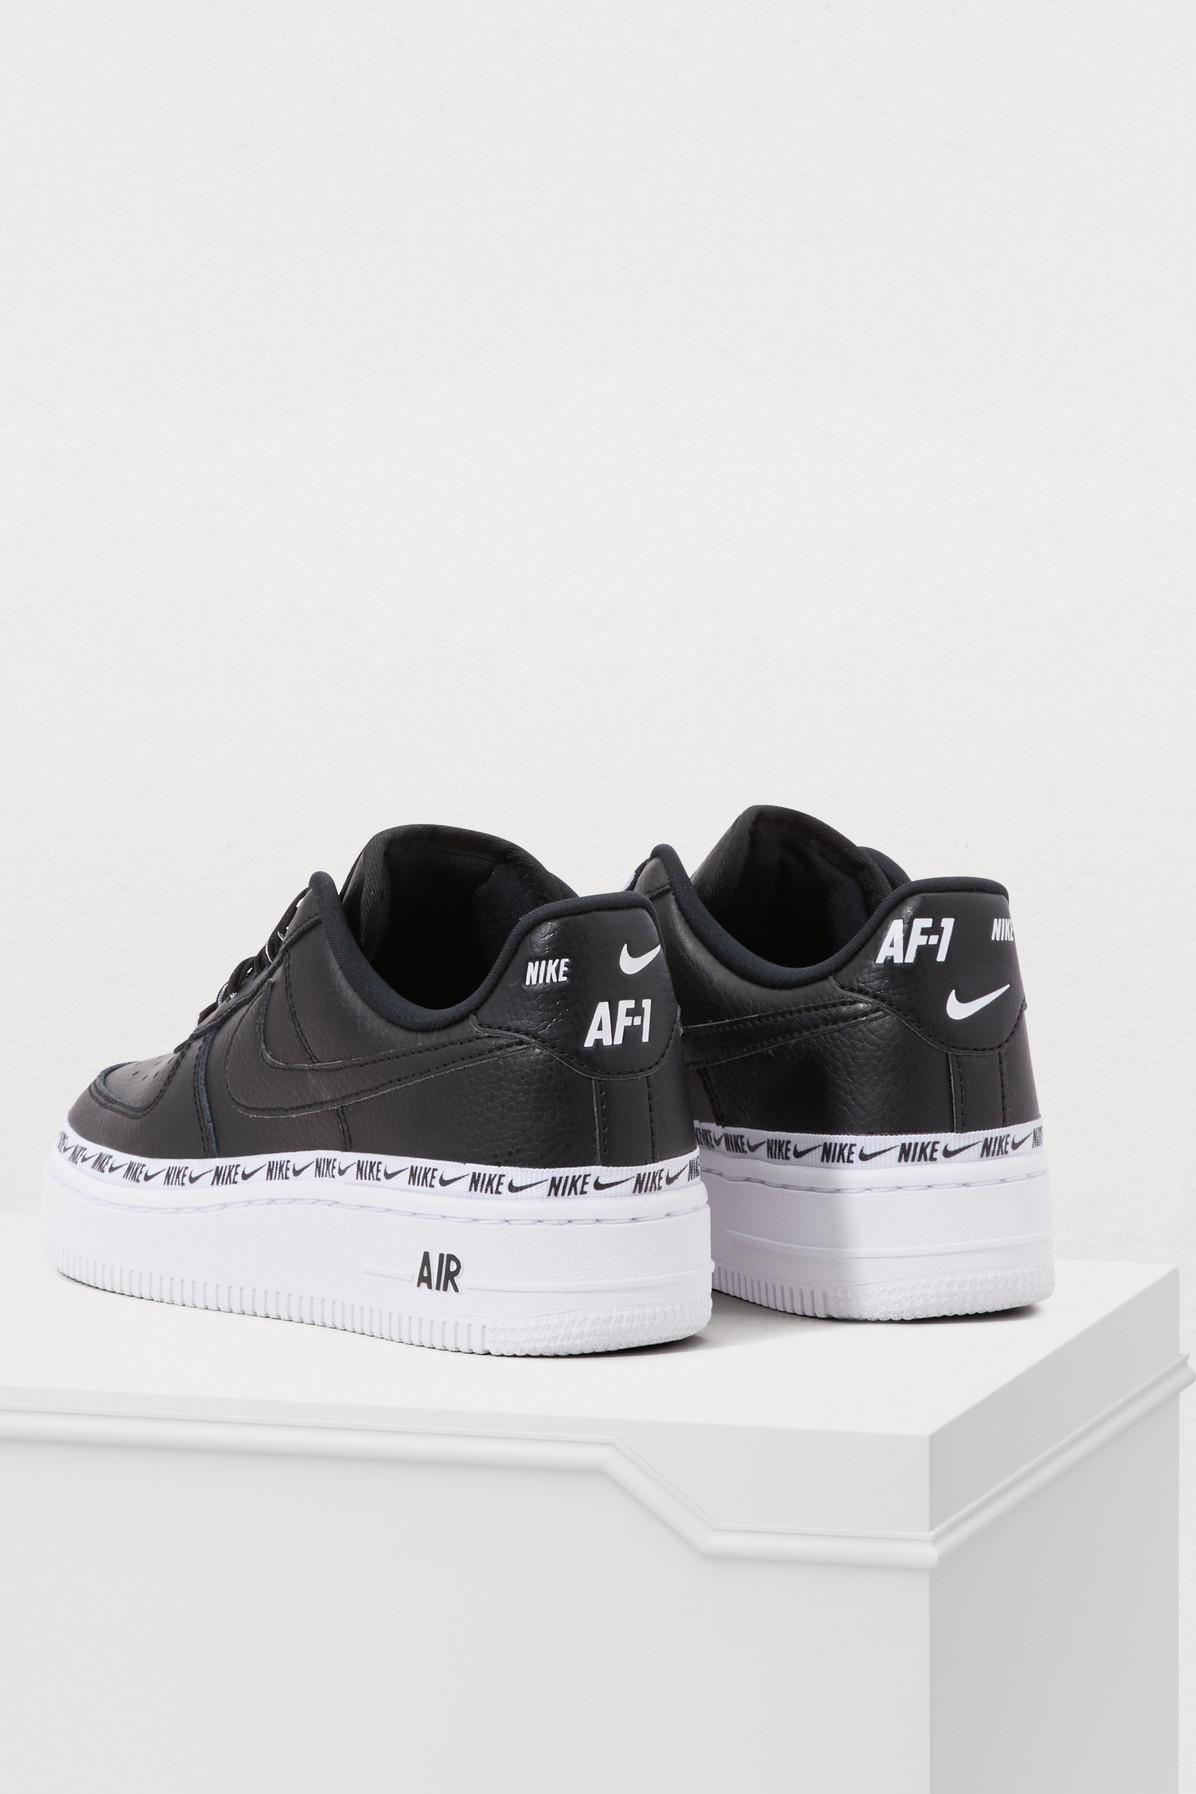 Nike Air Force 1 07 Se Prm Sneakers in Black/Black-White (Black) - Lyst